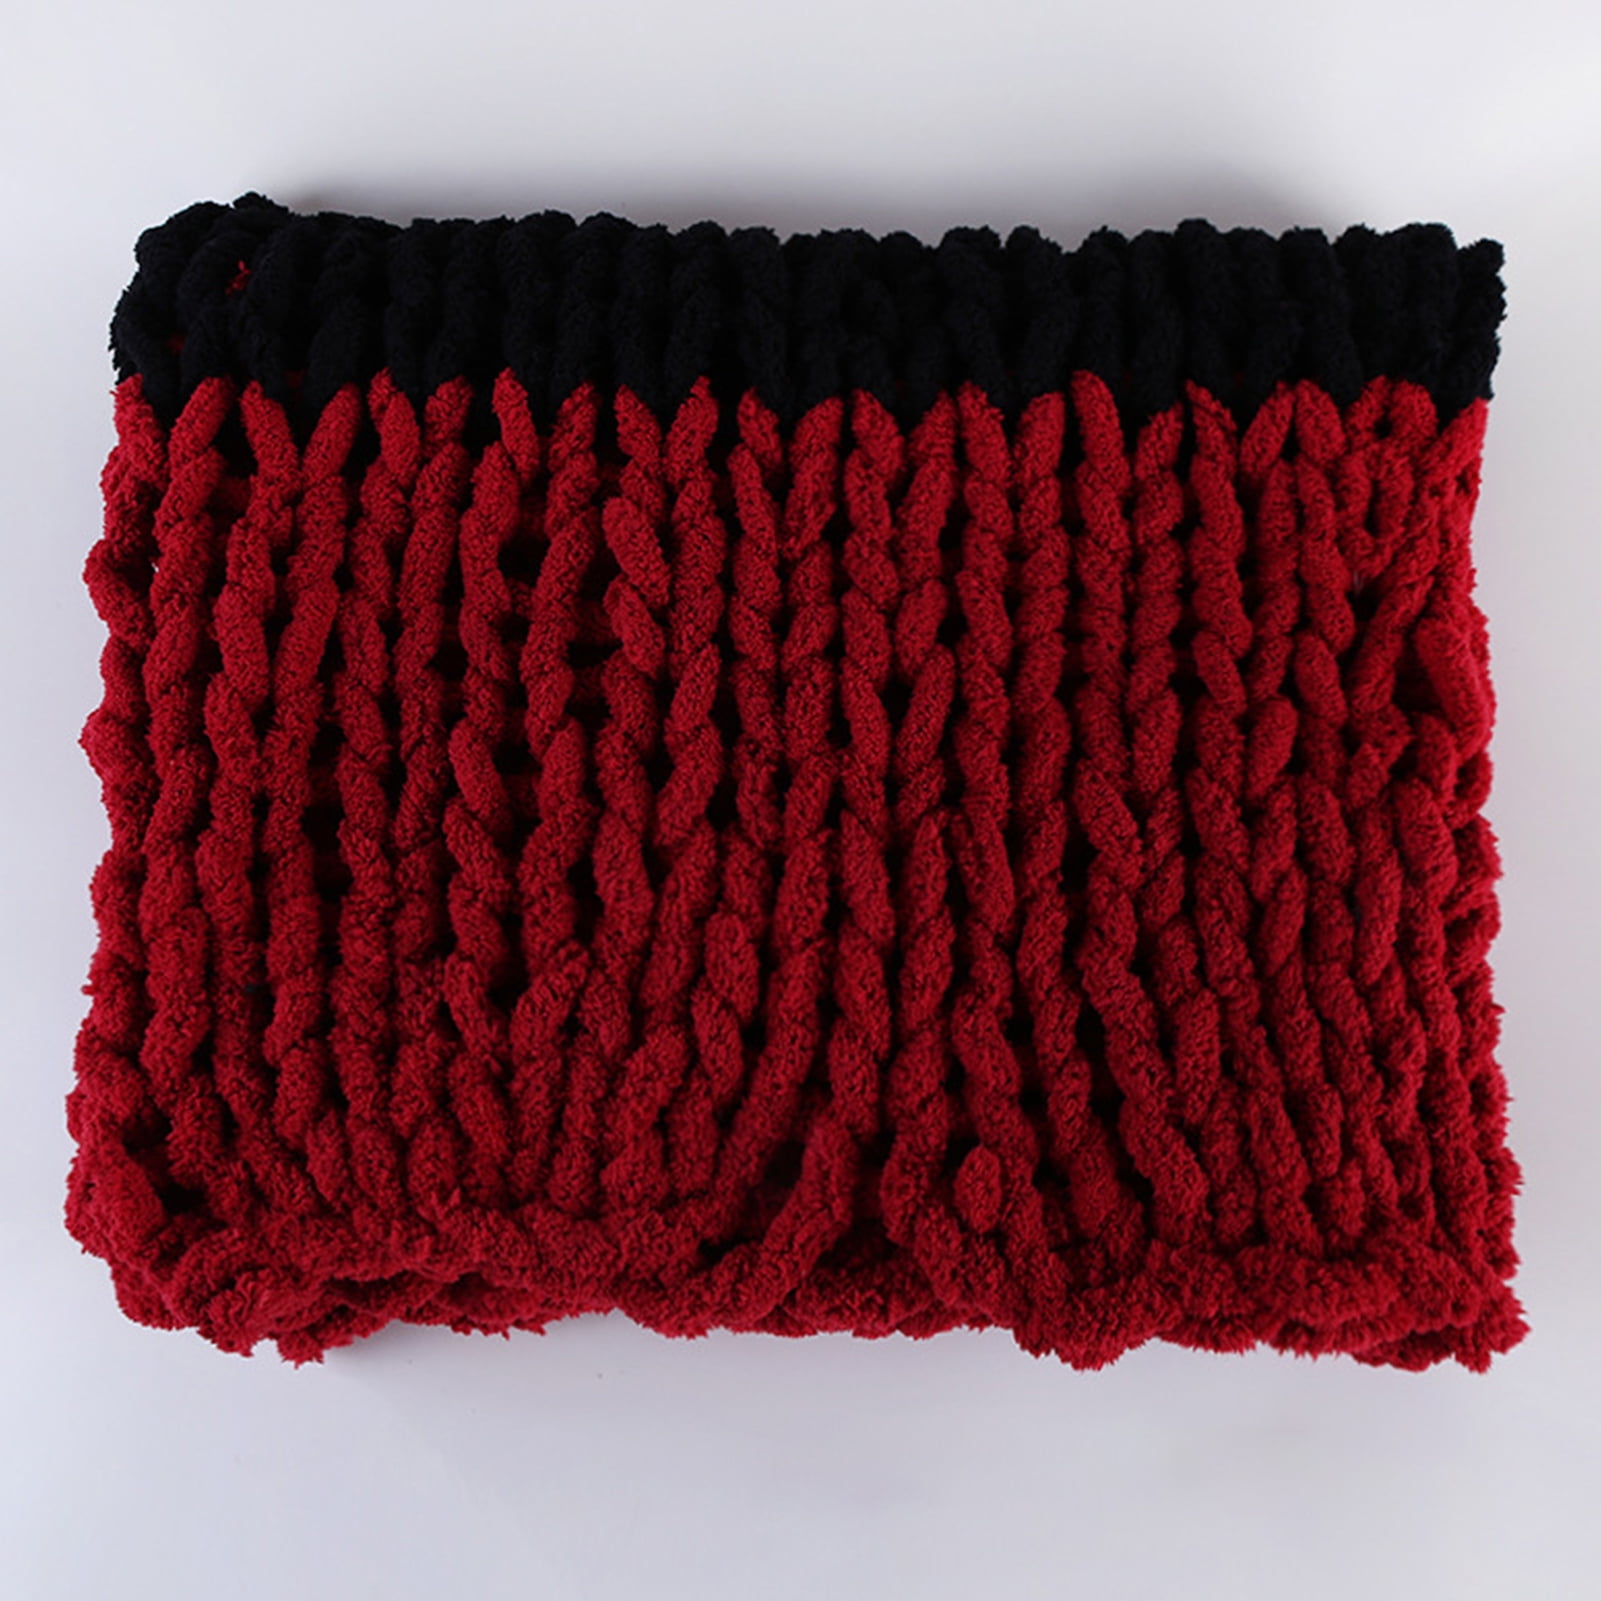 Red Berry Crochet: Friday Finds: Boye Yarn Threader